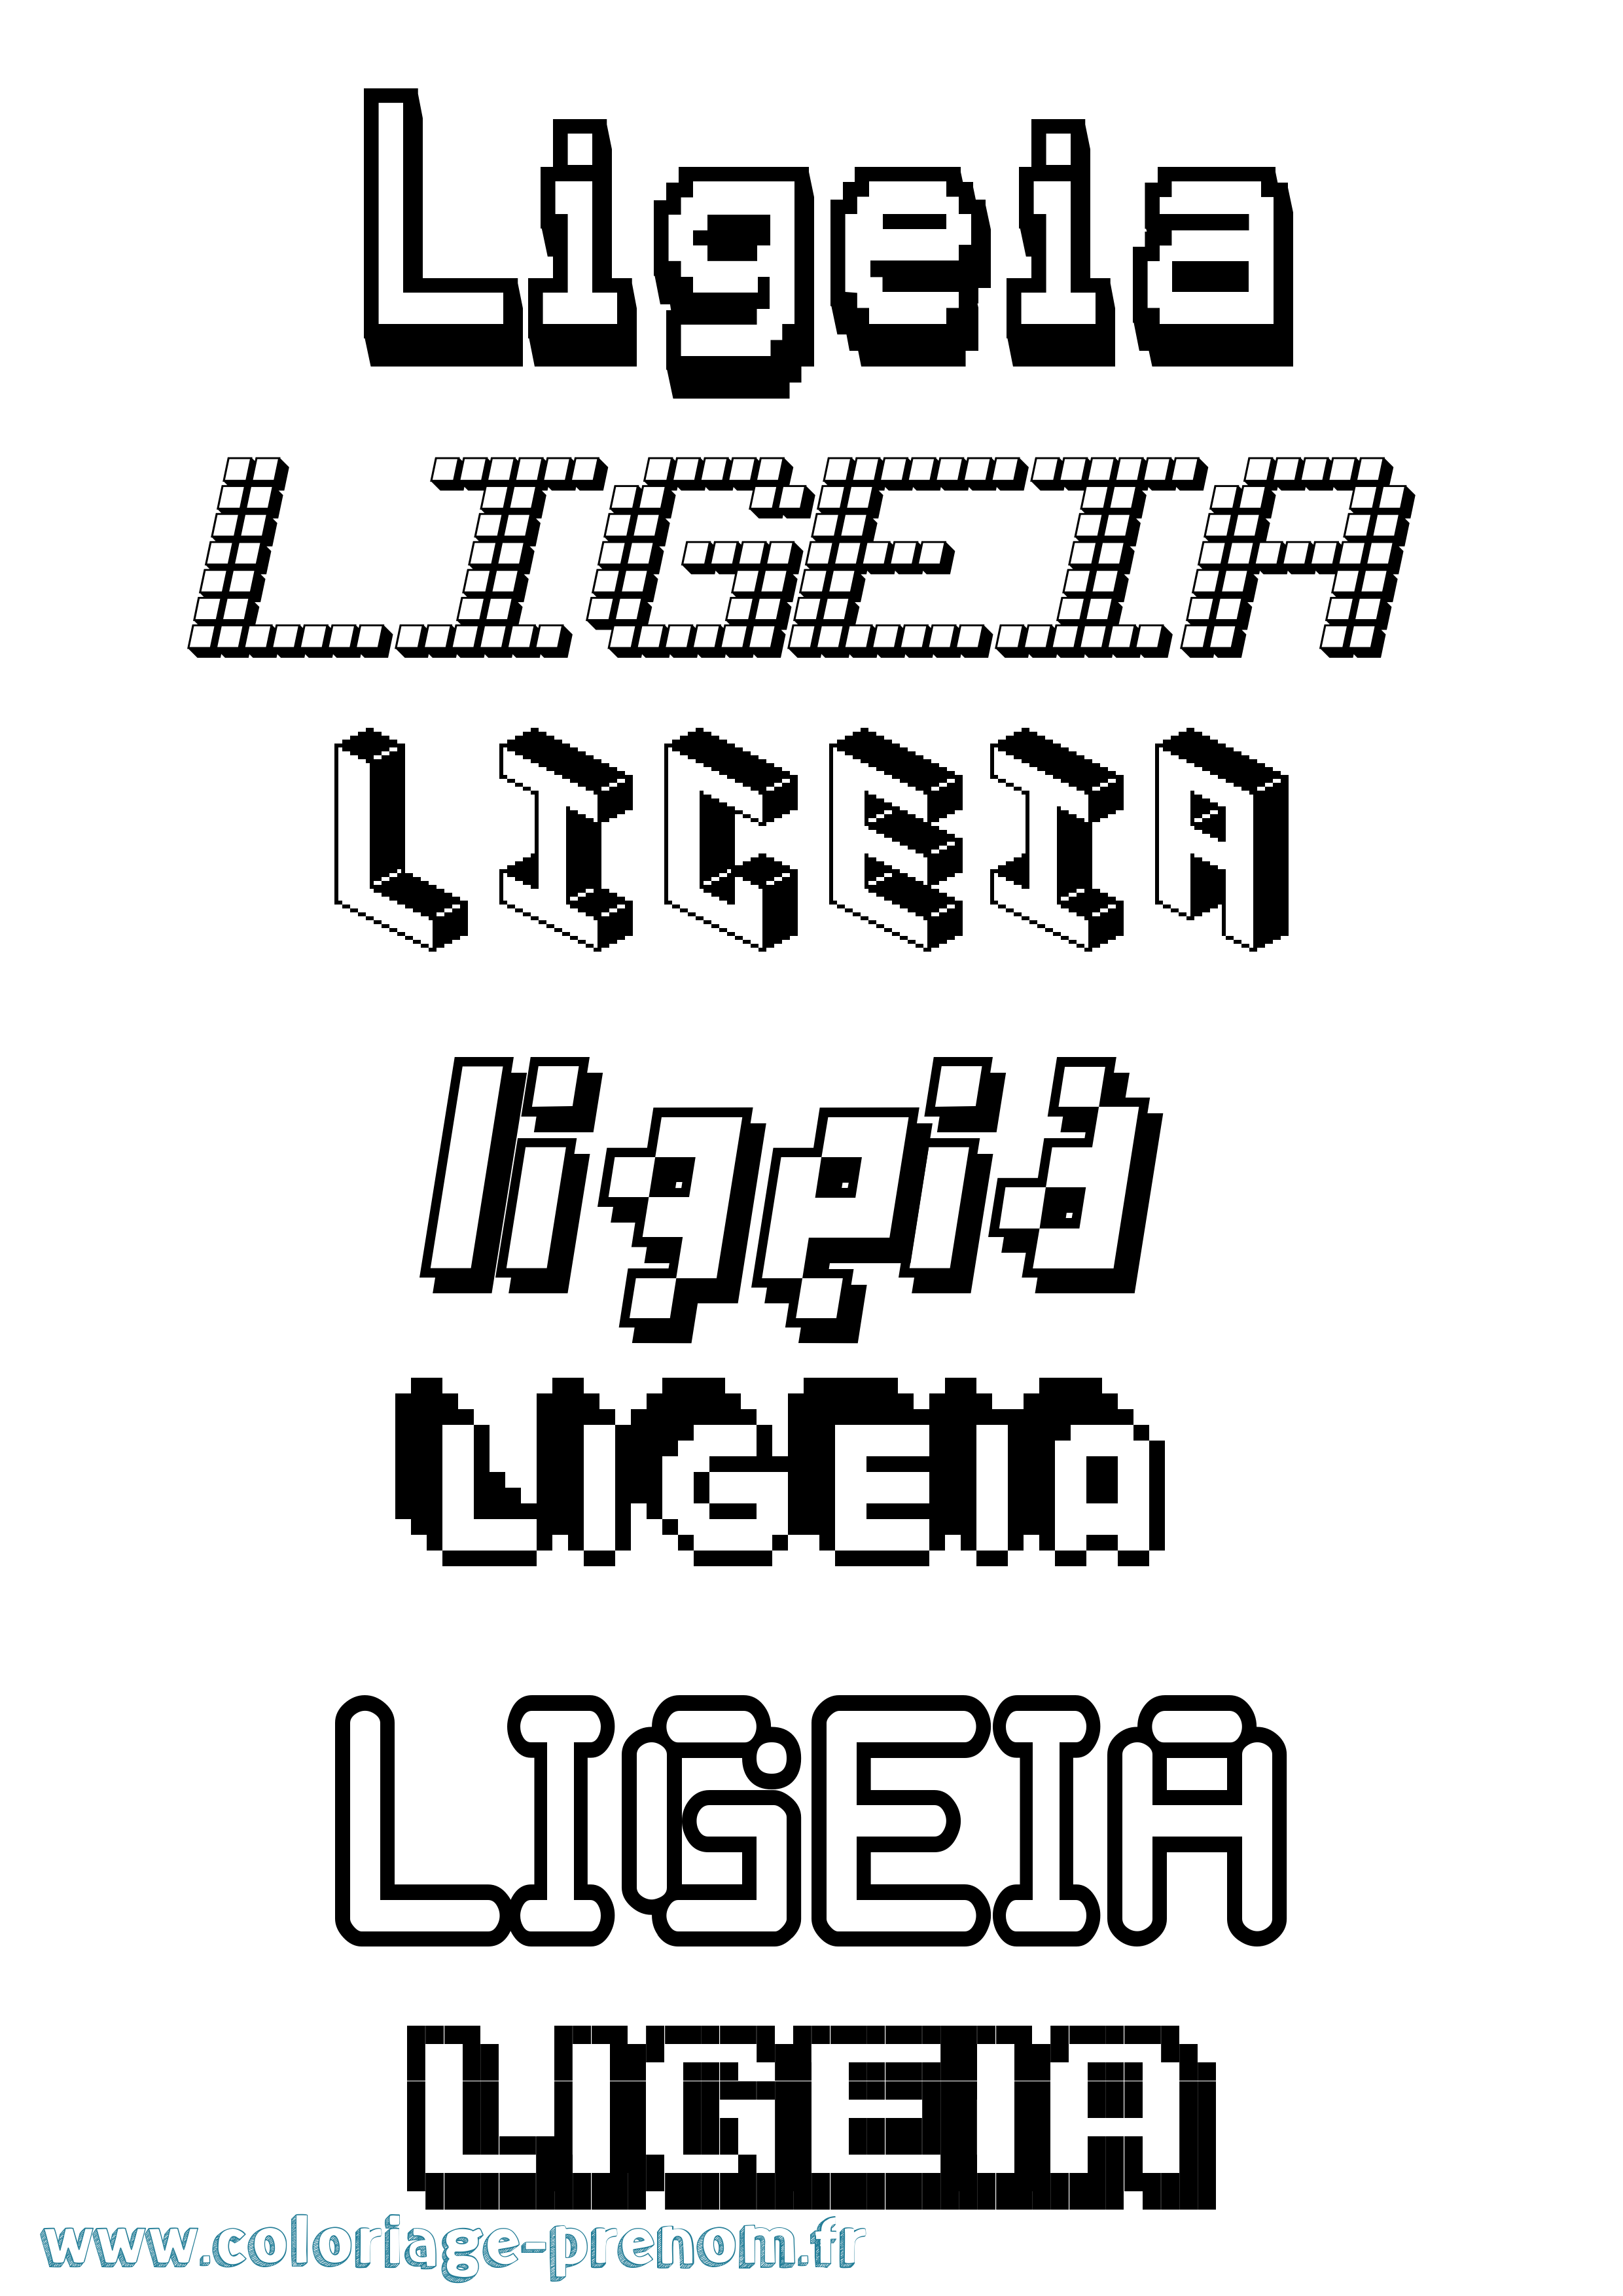 Coloriage prénom Ligeia Pixel